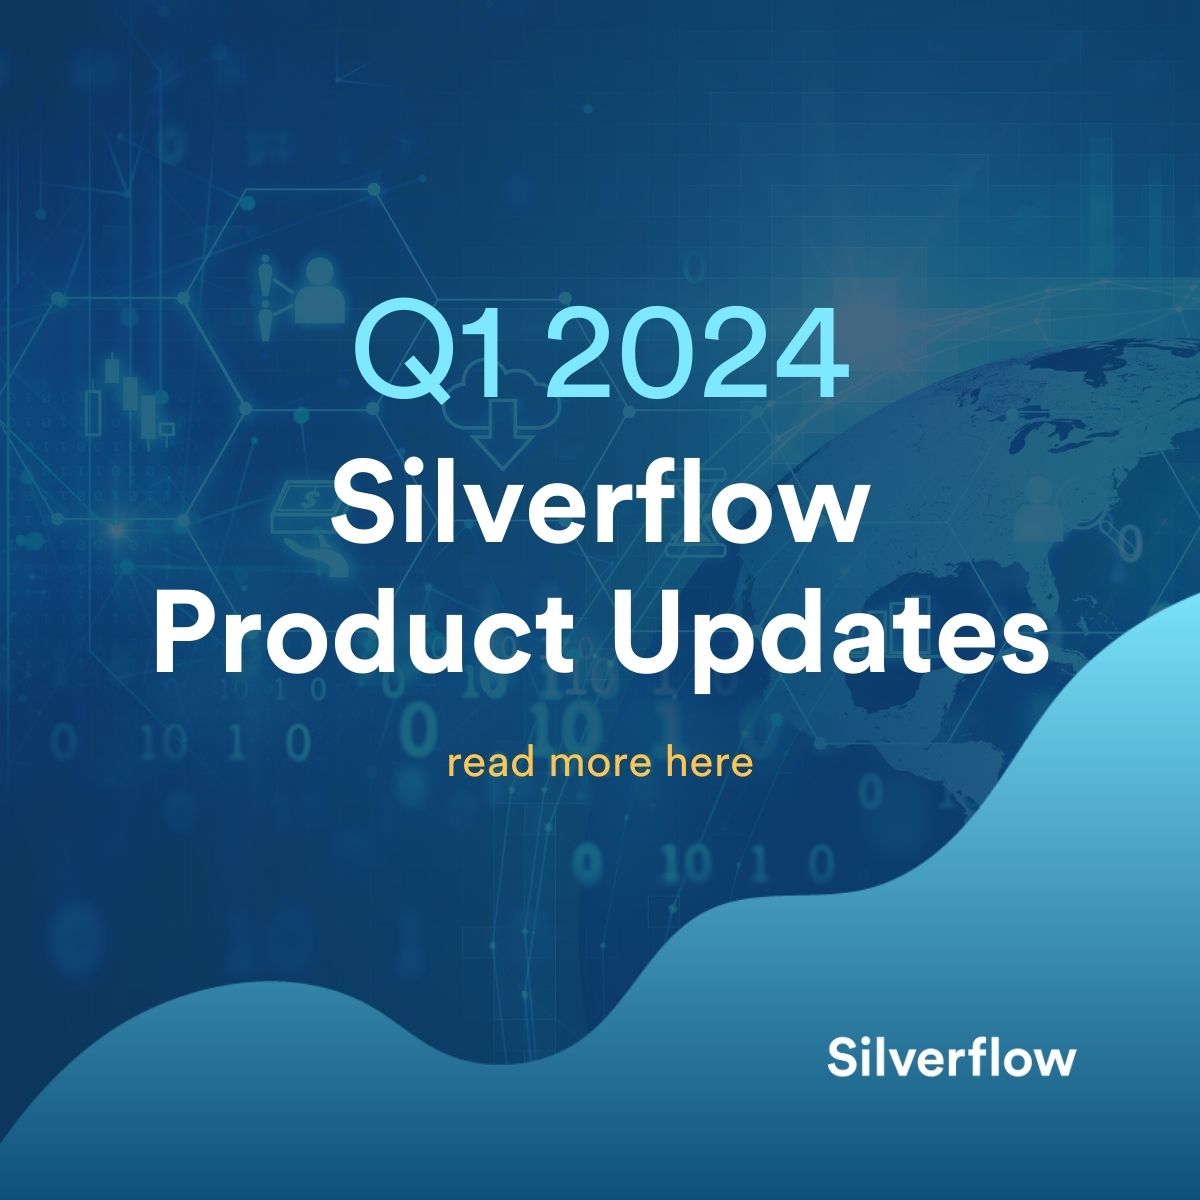 Q1 2024 Silverflow Product Updates